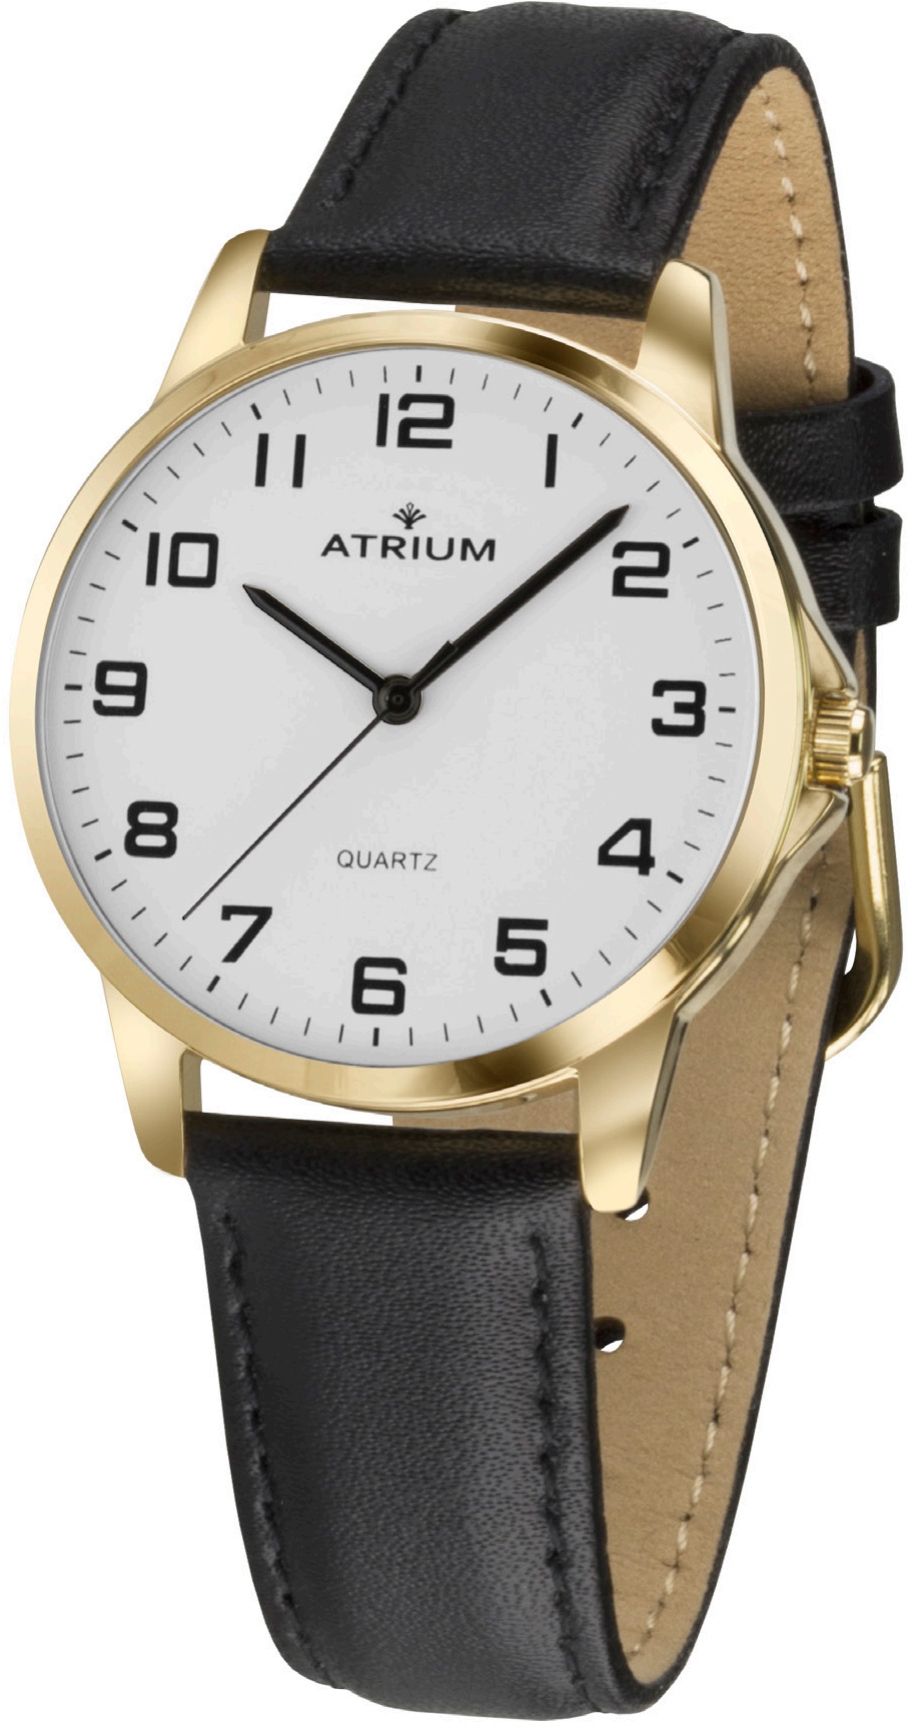 - A36-20 Watch - ATRIUM leather - - Men\'s Black Goldtoned